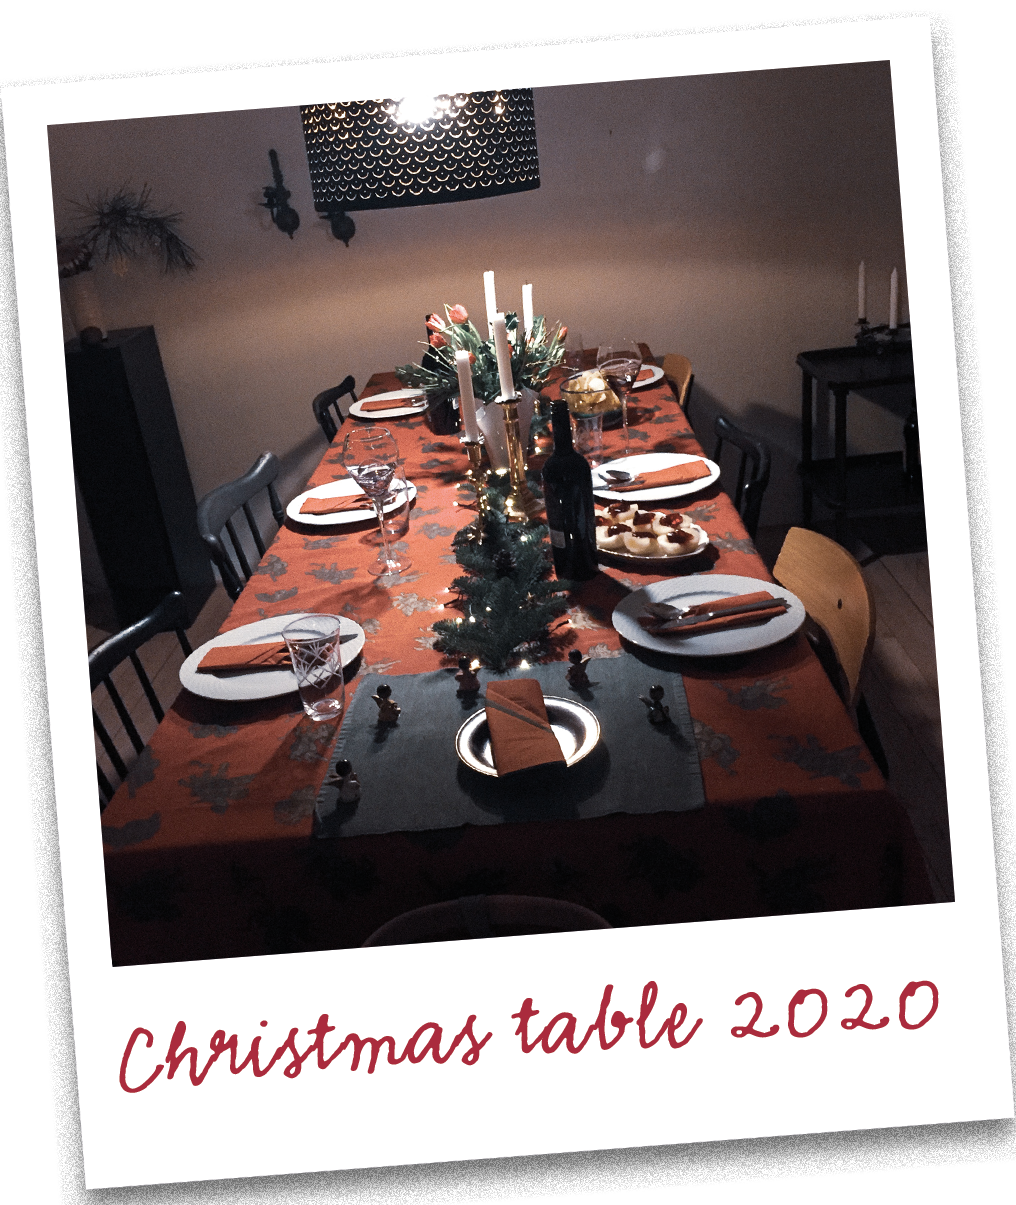 julebord christmas table julemiddag christmas dinner bordaekning table setting centerpiece borddekoration juledekoration